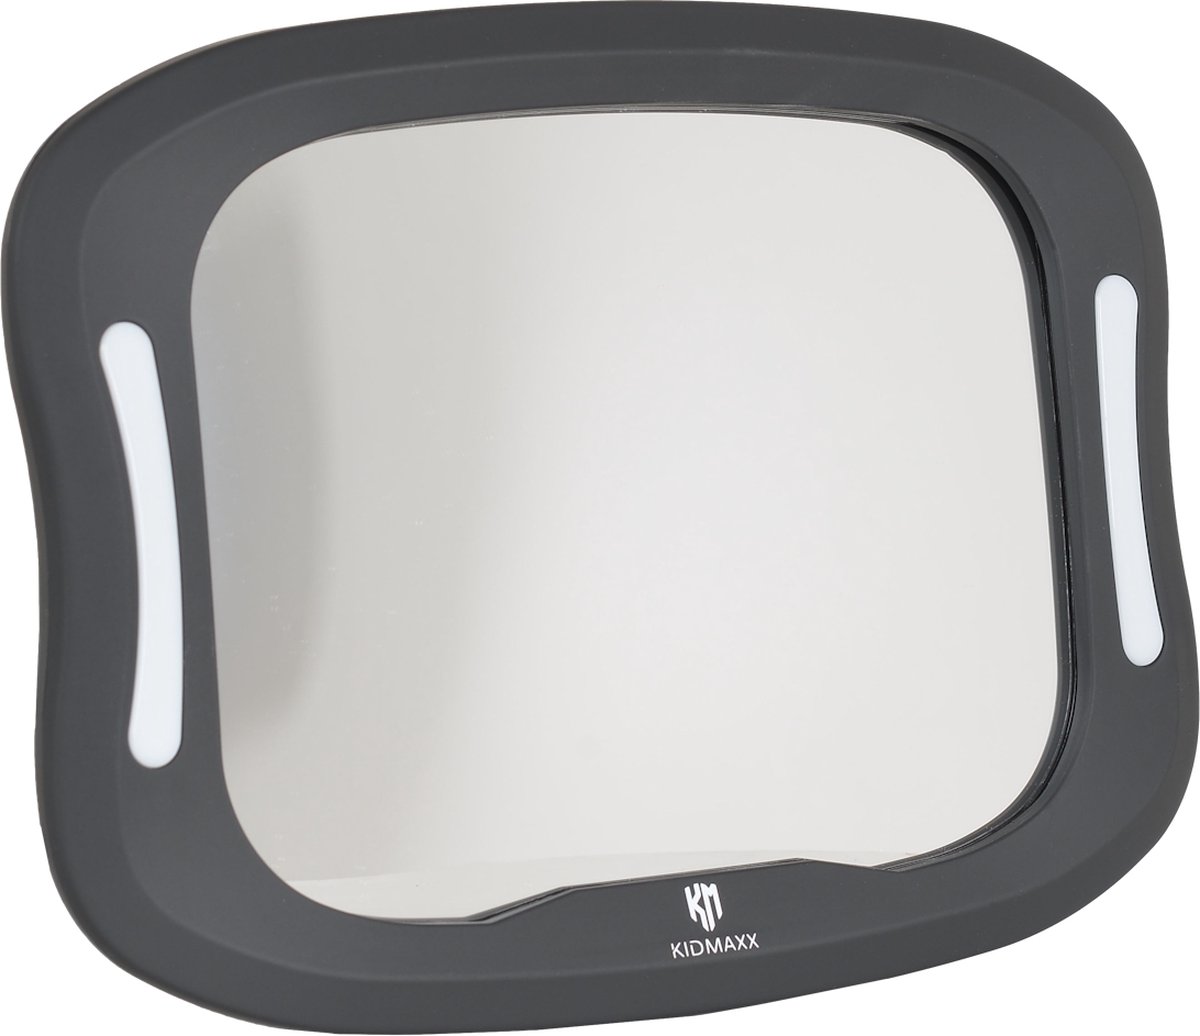 Kidmaxx Reflex 360° Autospiegel met LED Licht 110415